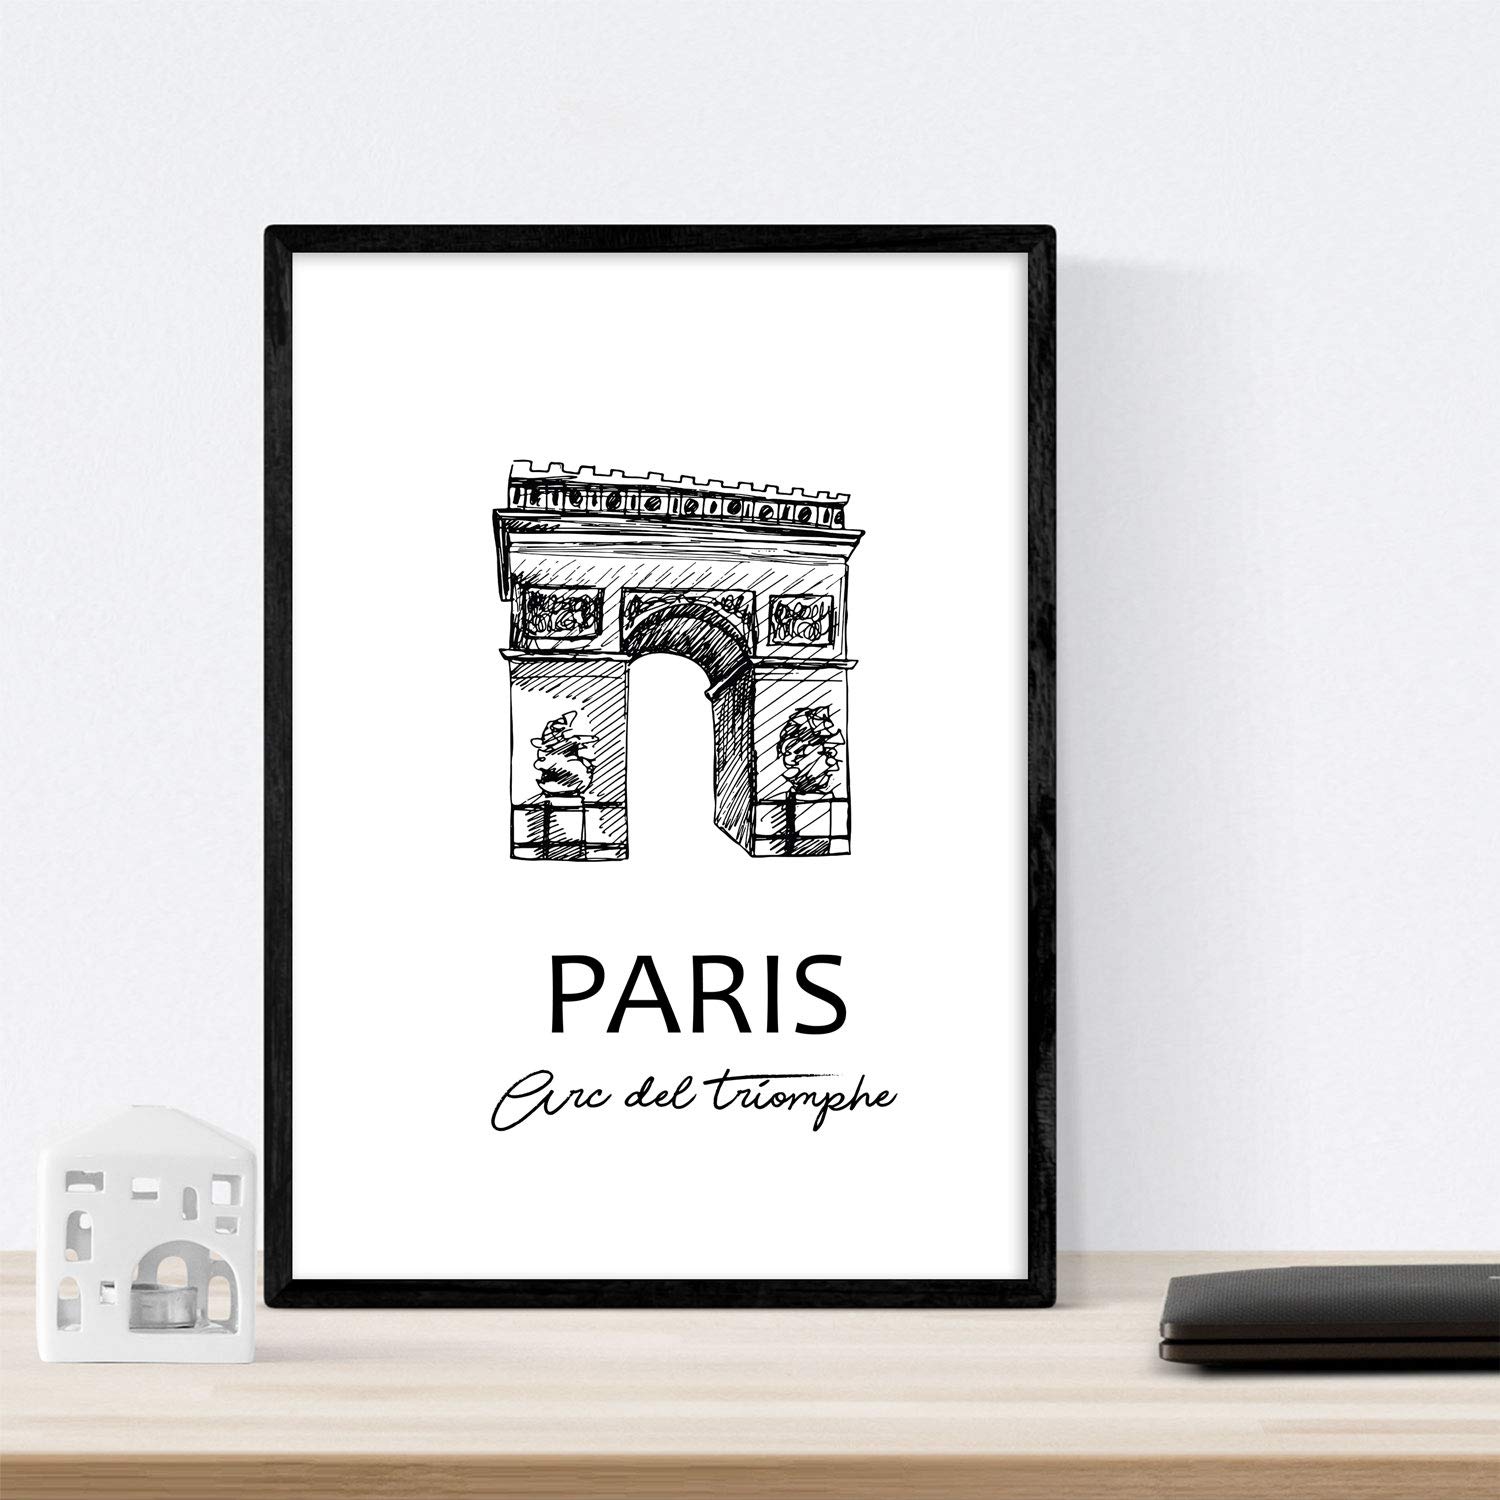 Pack de posters de Paris -Arco del triunfo. Láminas con monumentos de ciudades.-Artwork-Nacnic-Nacnic Estudio SL